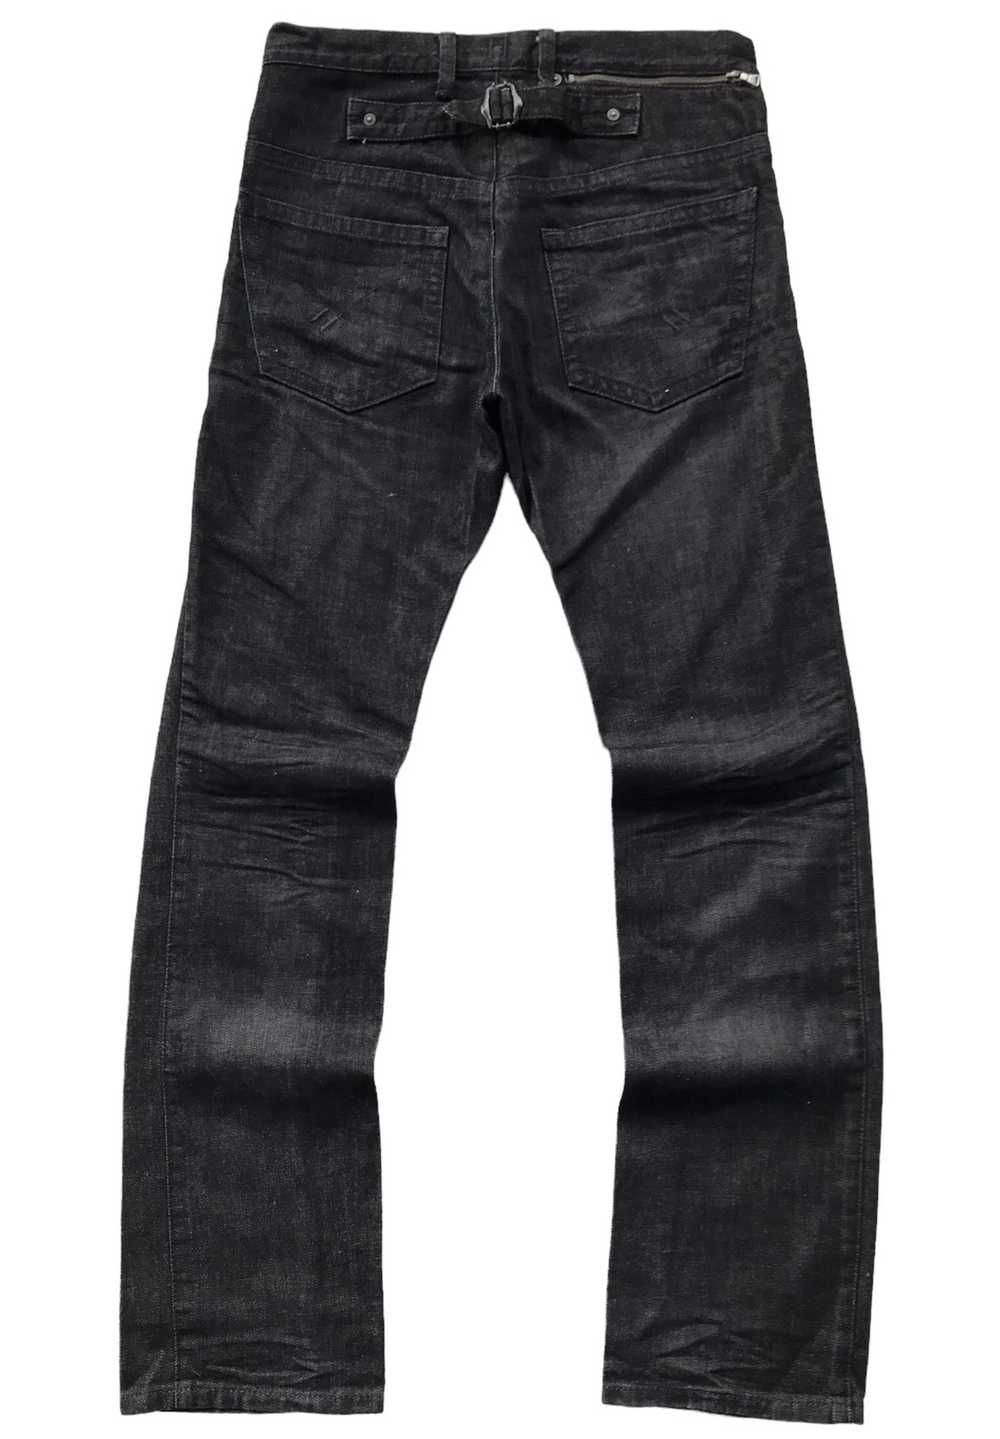 Rare NEIL BARRETT Buckle Back Flared Jeans - image 6